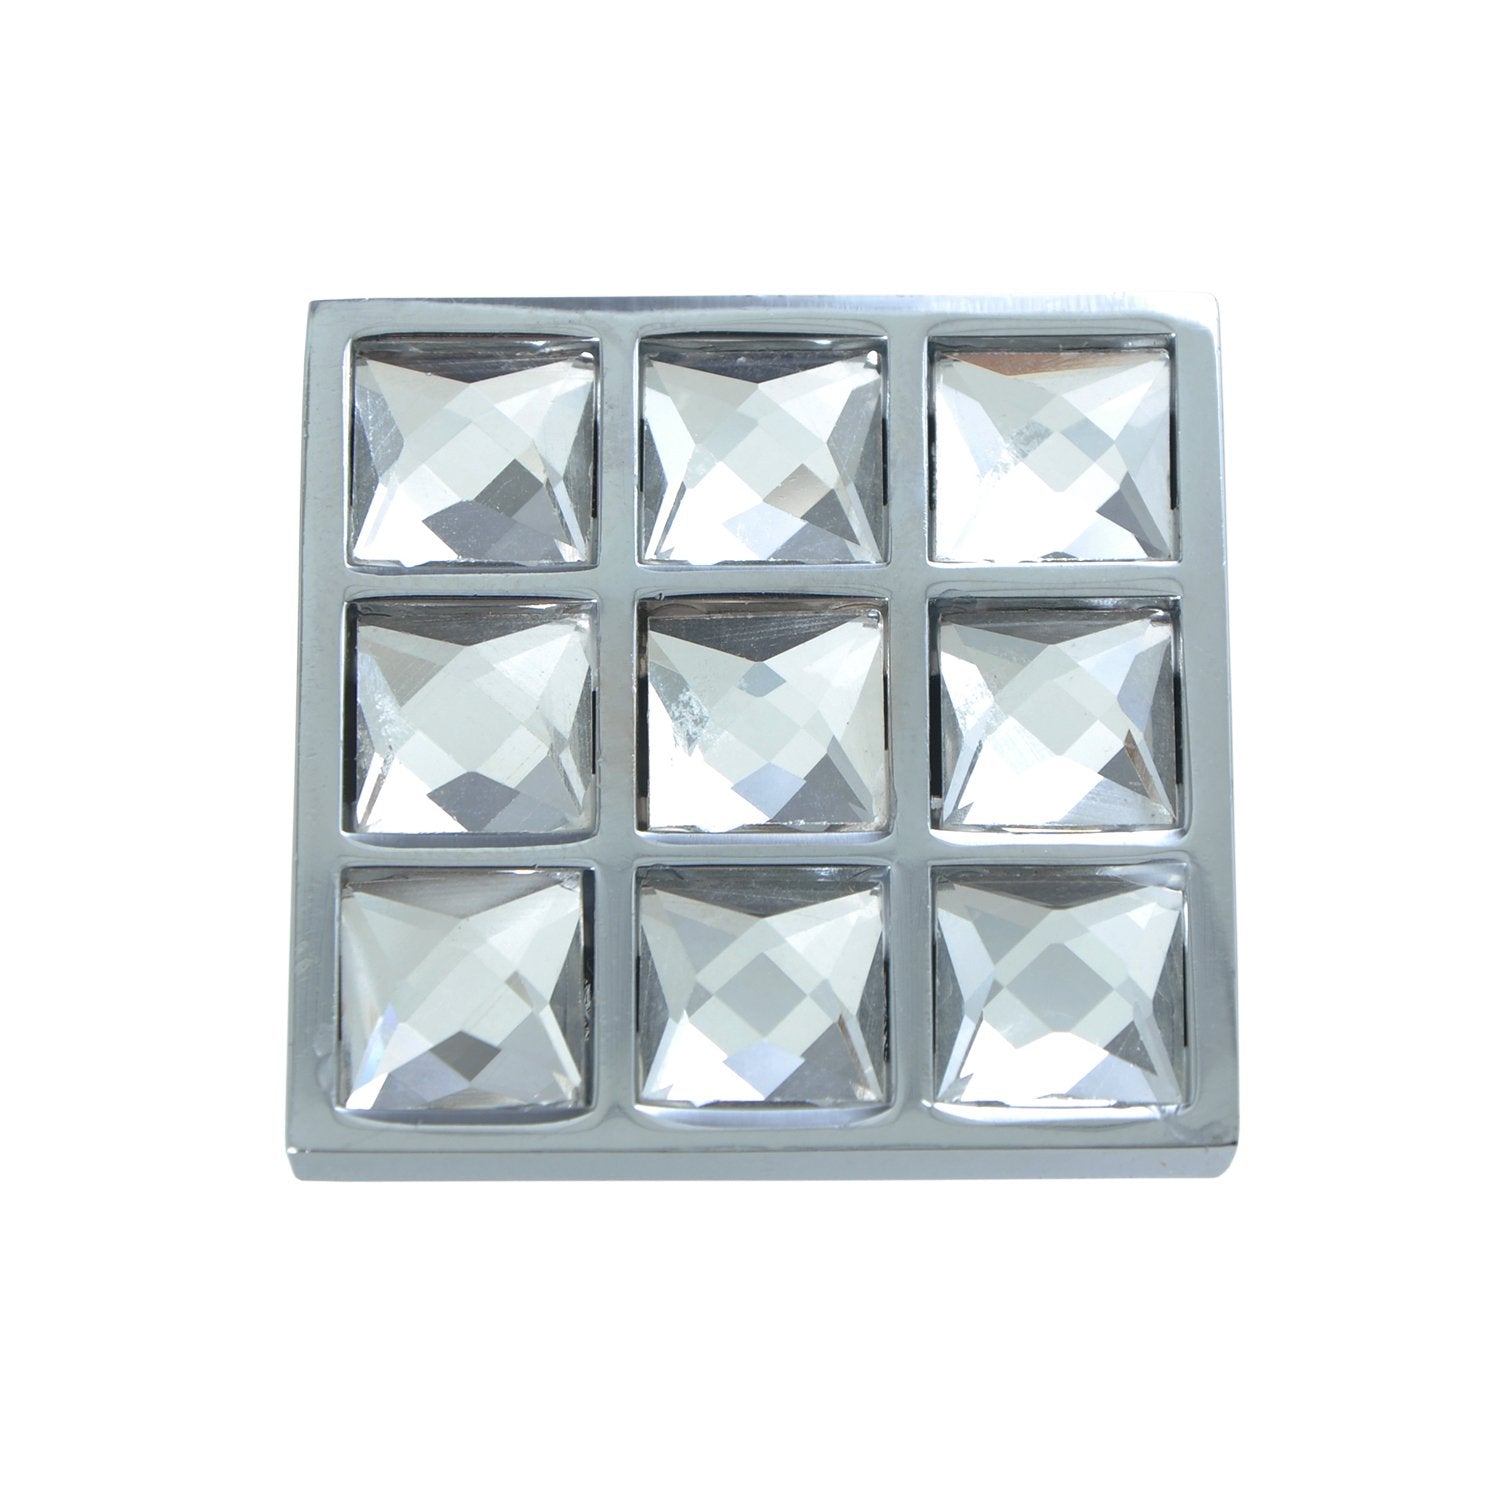 Loft97 HW337PLCH021 Gleam Grid 9 Crystal Square Cabinet Knob, 1.5", Polished Chrome